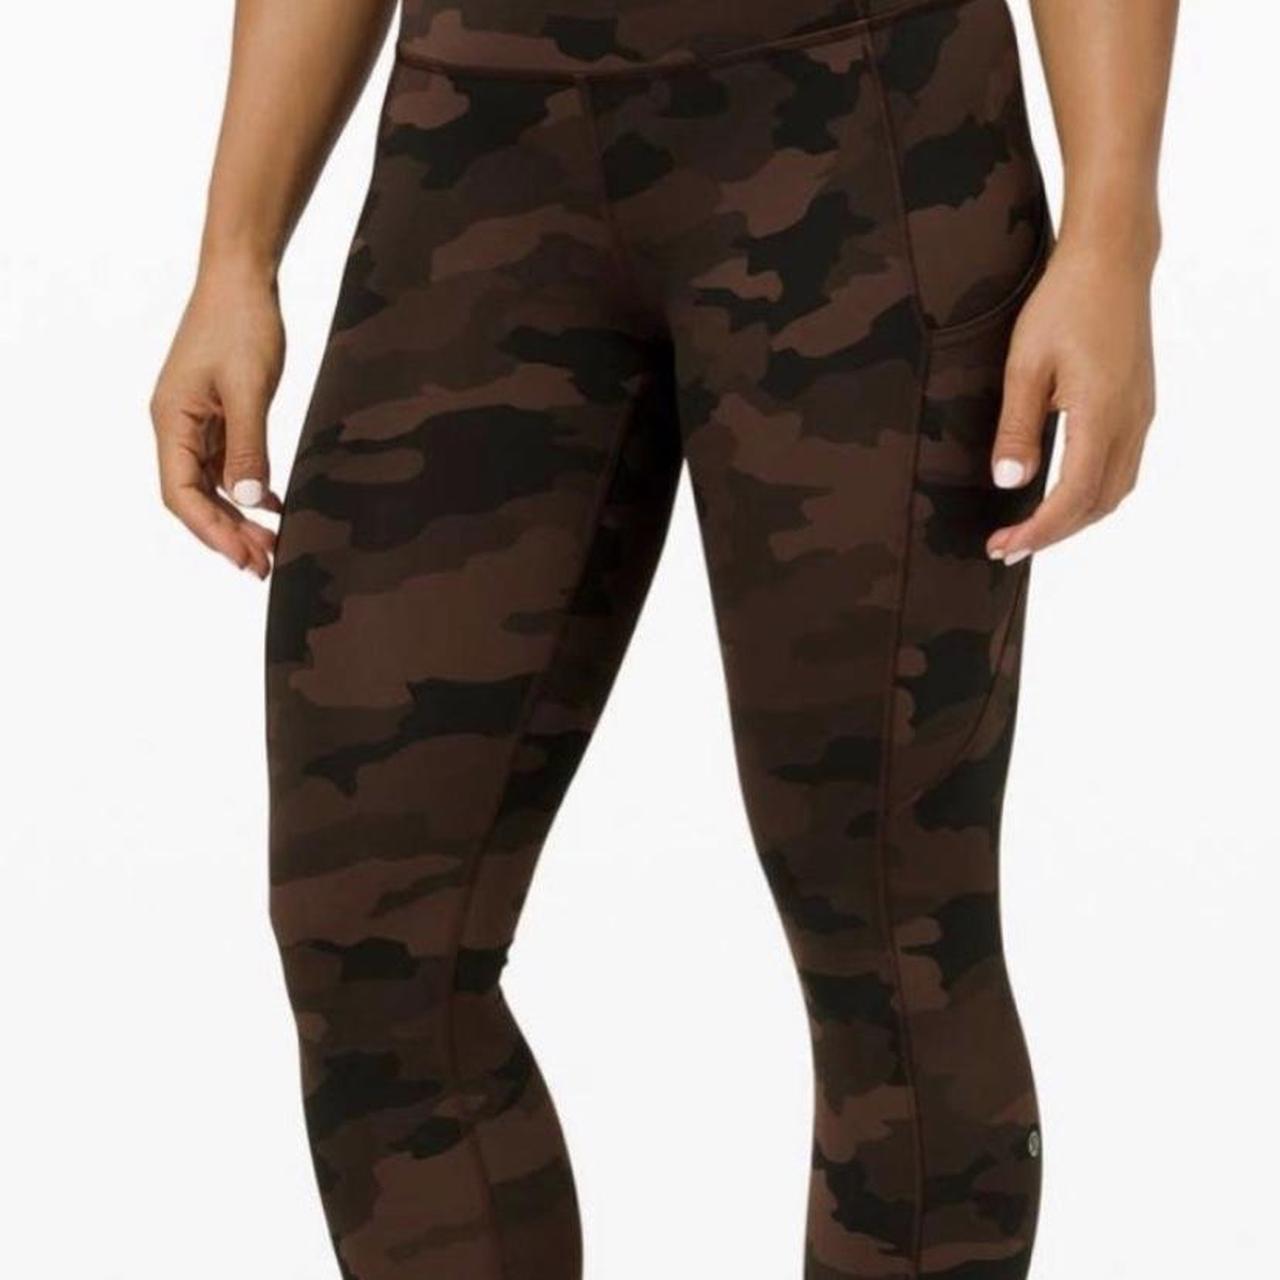 brown camo lululemon leggings size 2, #leggings